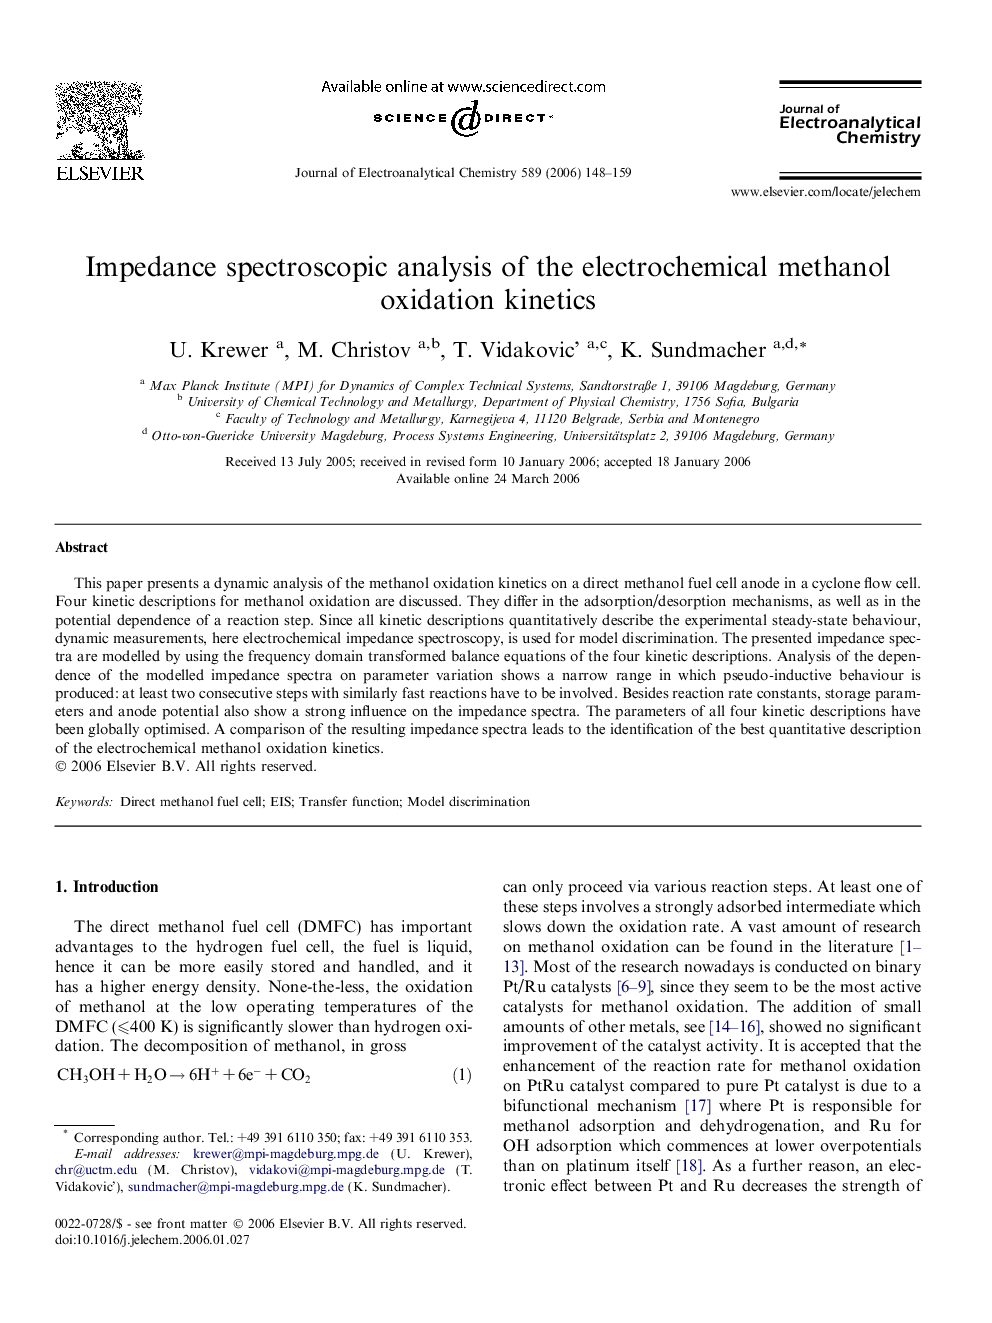 Impedance spectroscopic analysis of the electrochemical methanol oxidation kinetics